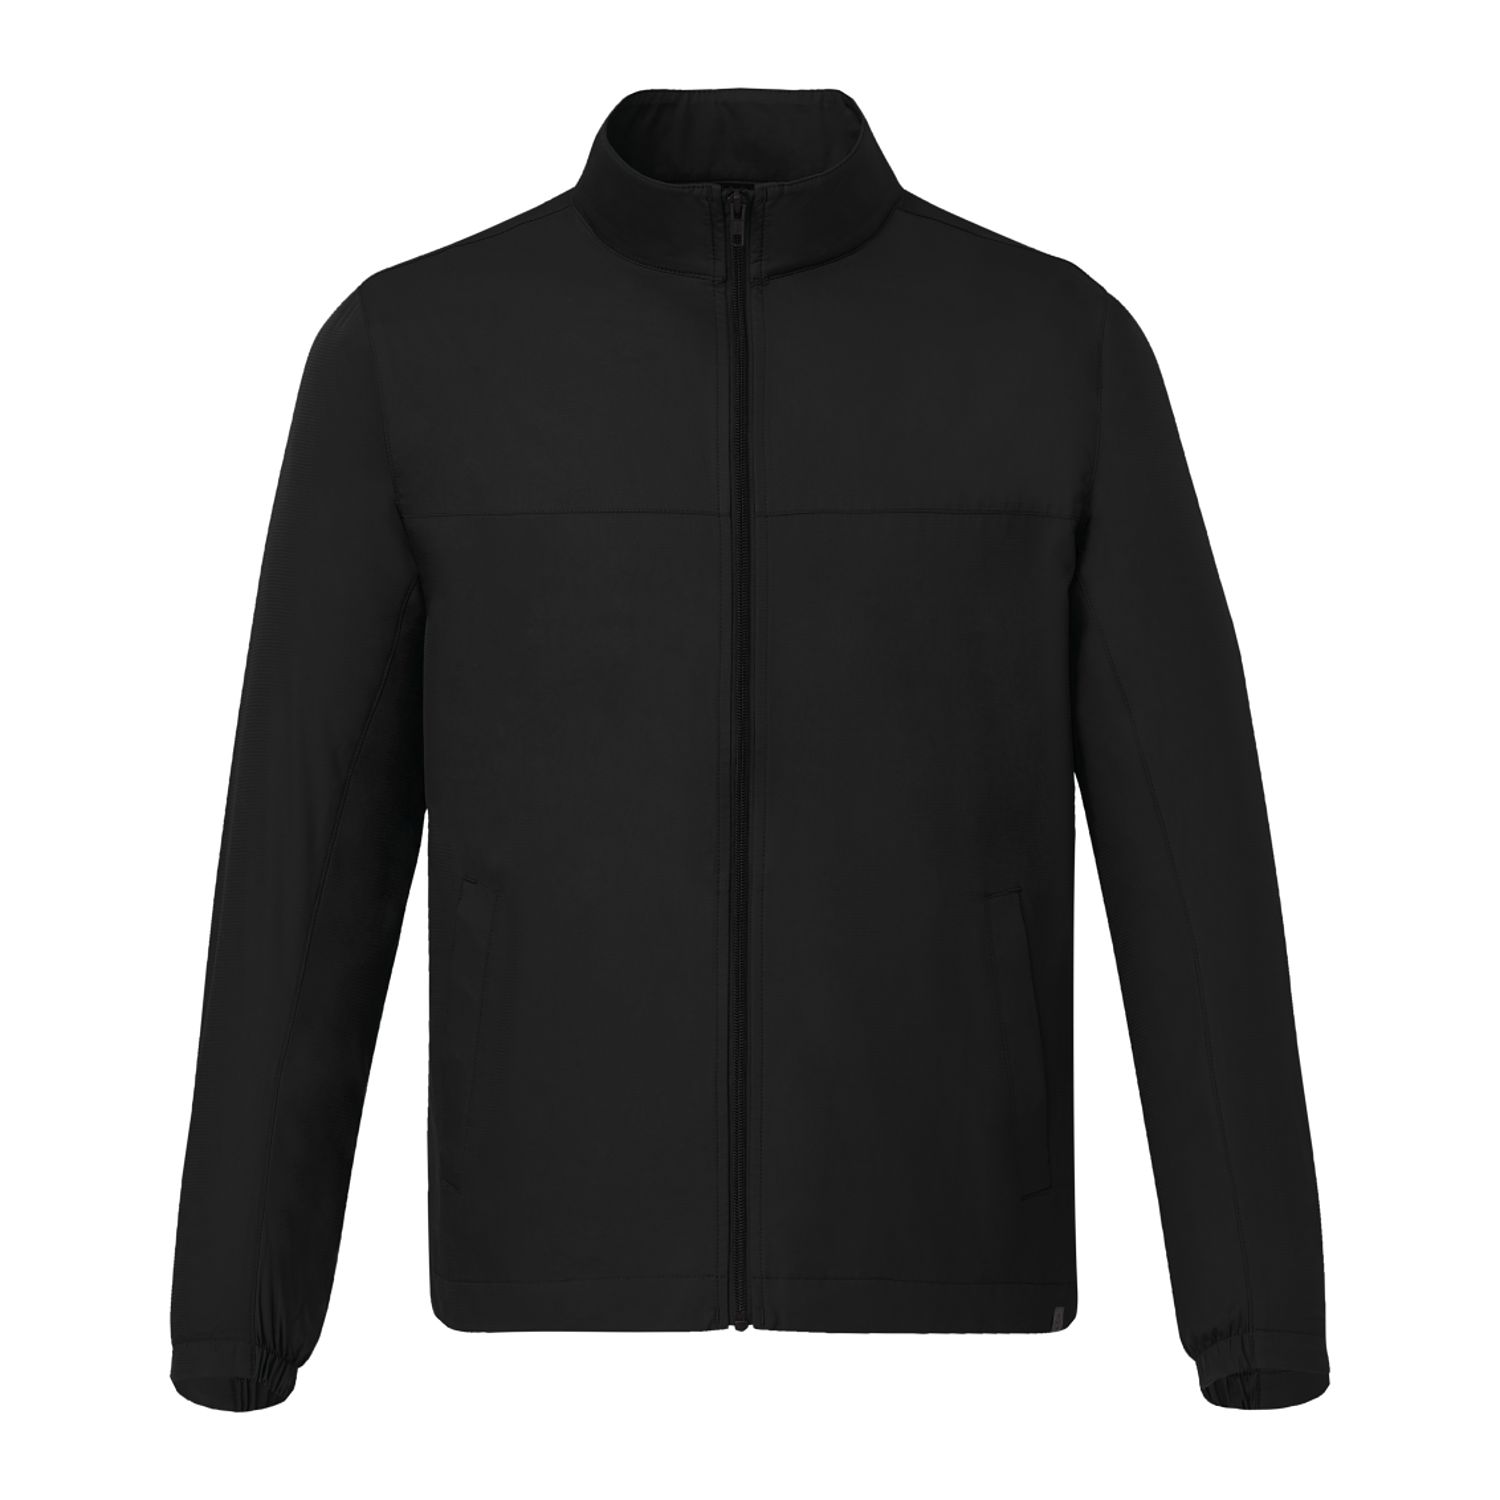 Trimark TM12727 - Men's MORGAN Eco Jacket